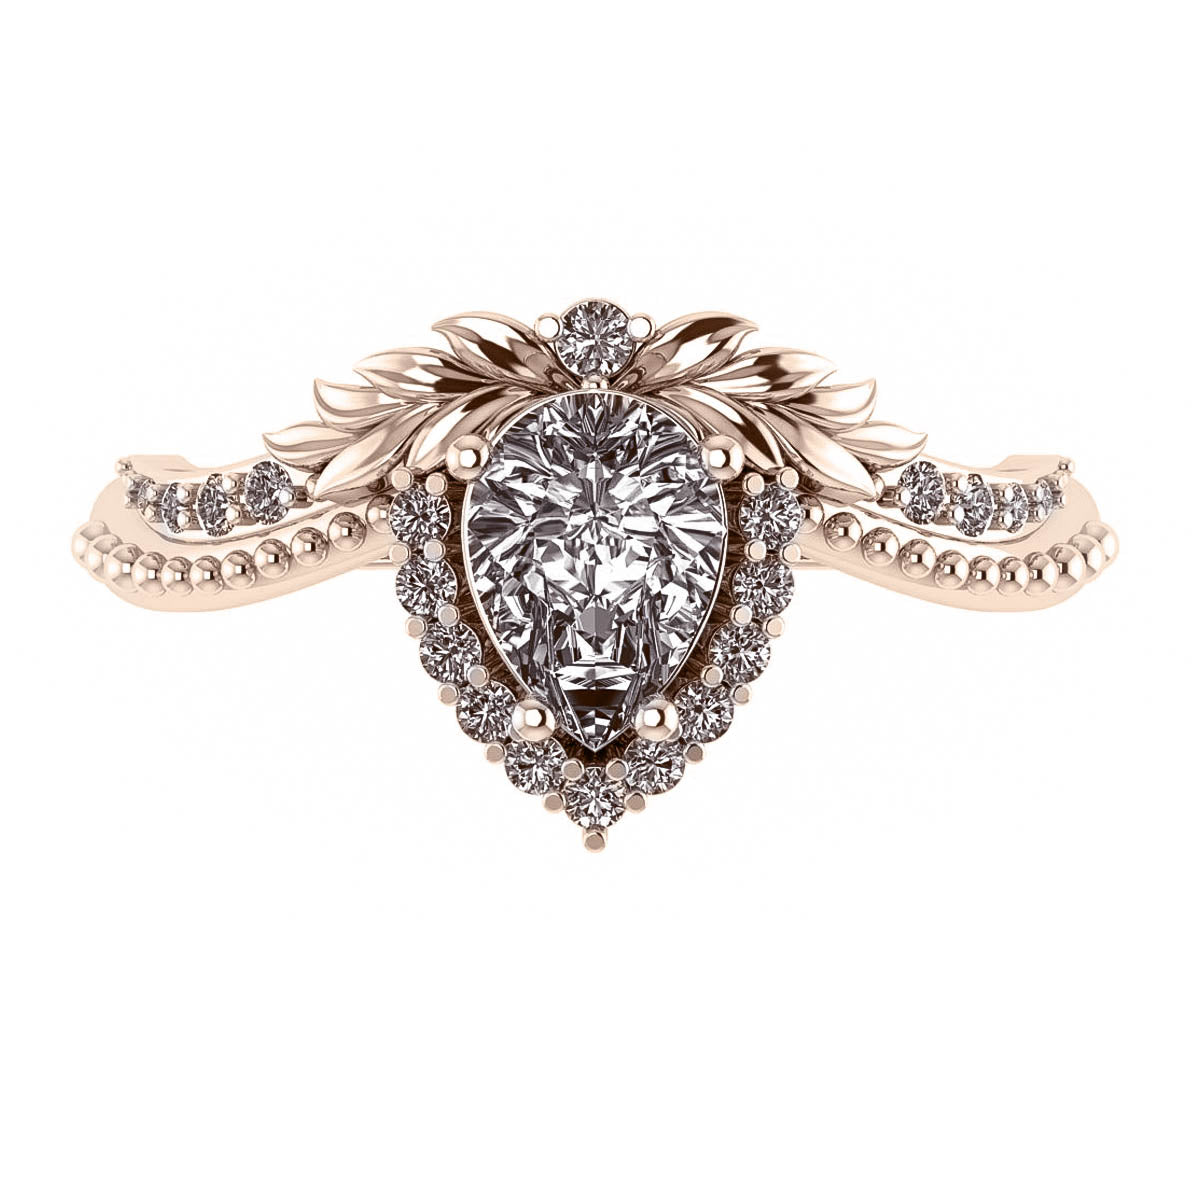 Lyonella | engagement ring setting with pear cut gemstone 7x5 mm - Eden Garden Jewelry™